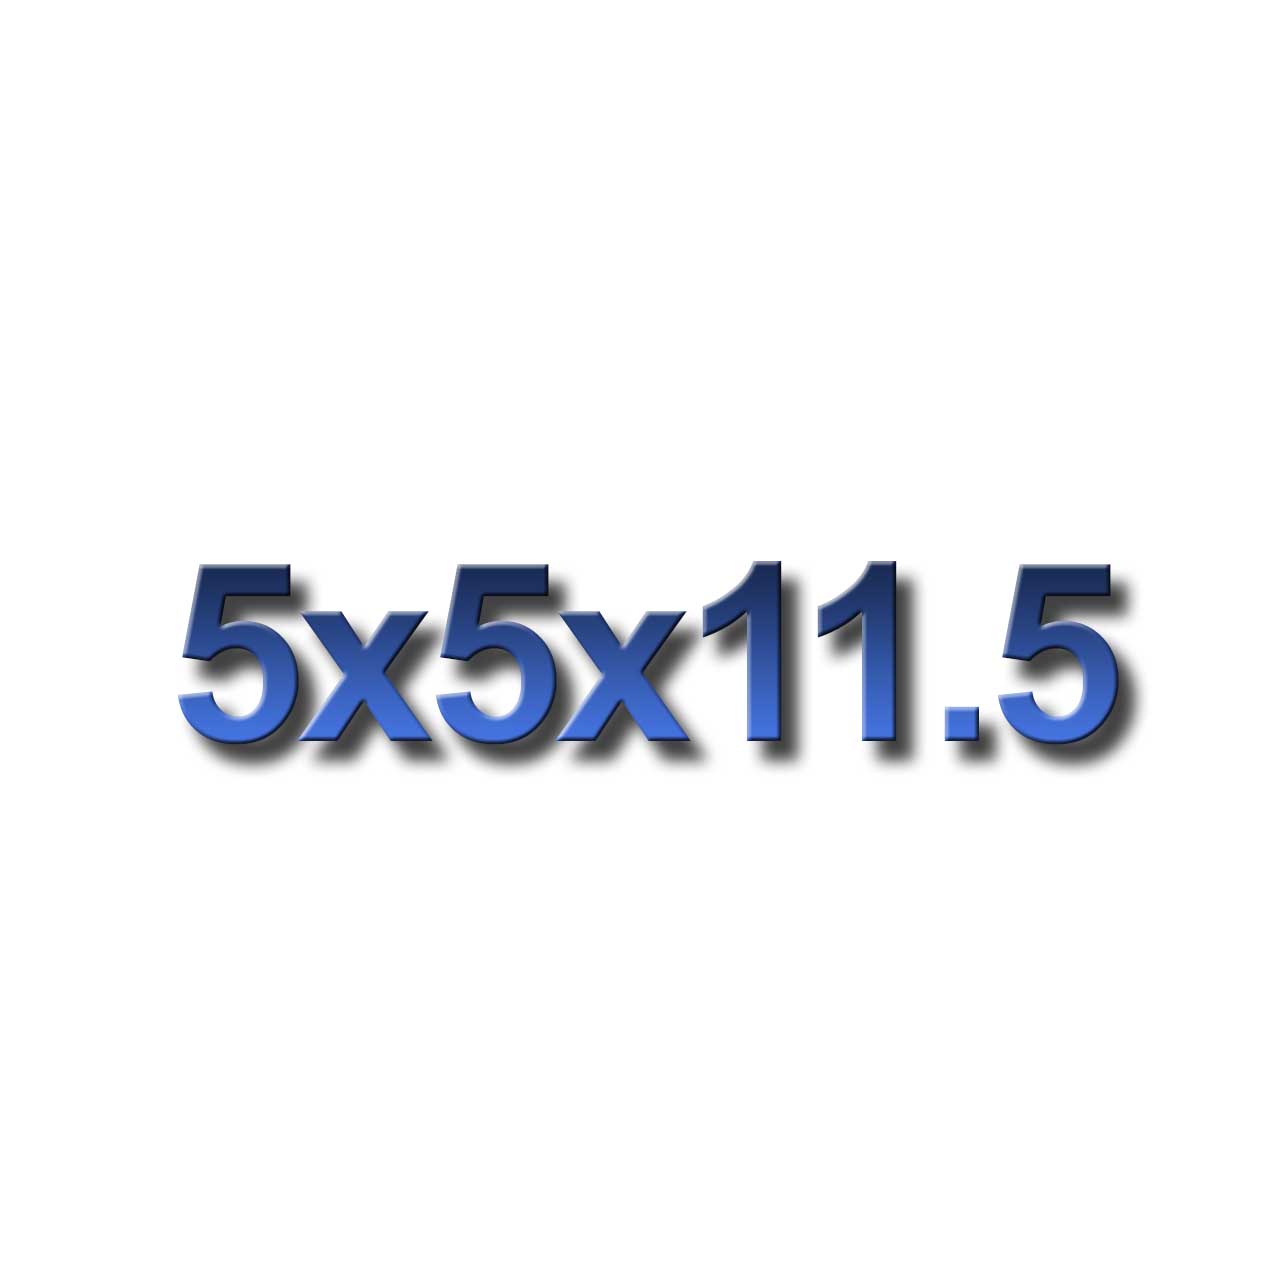 5x5x11.5